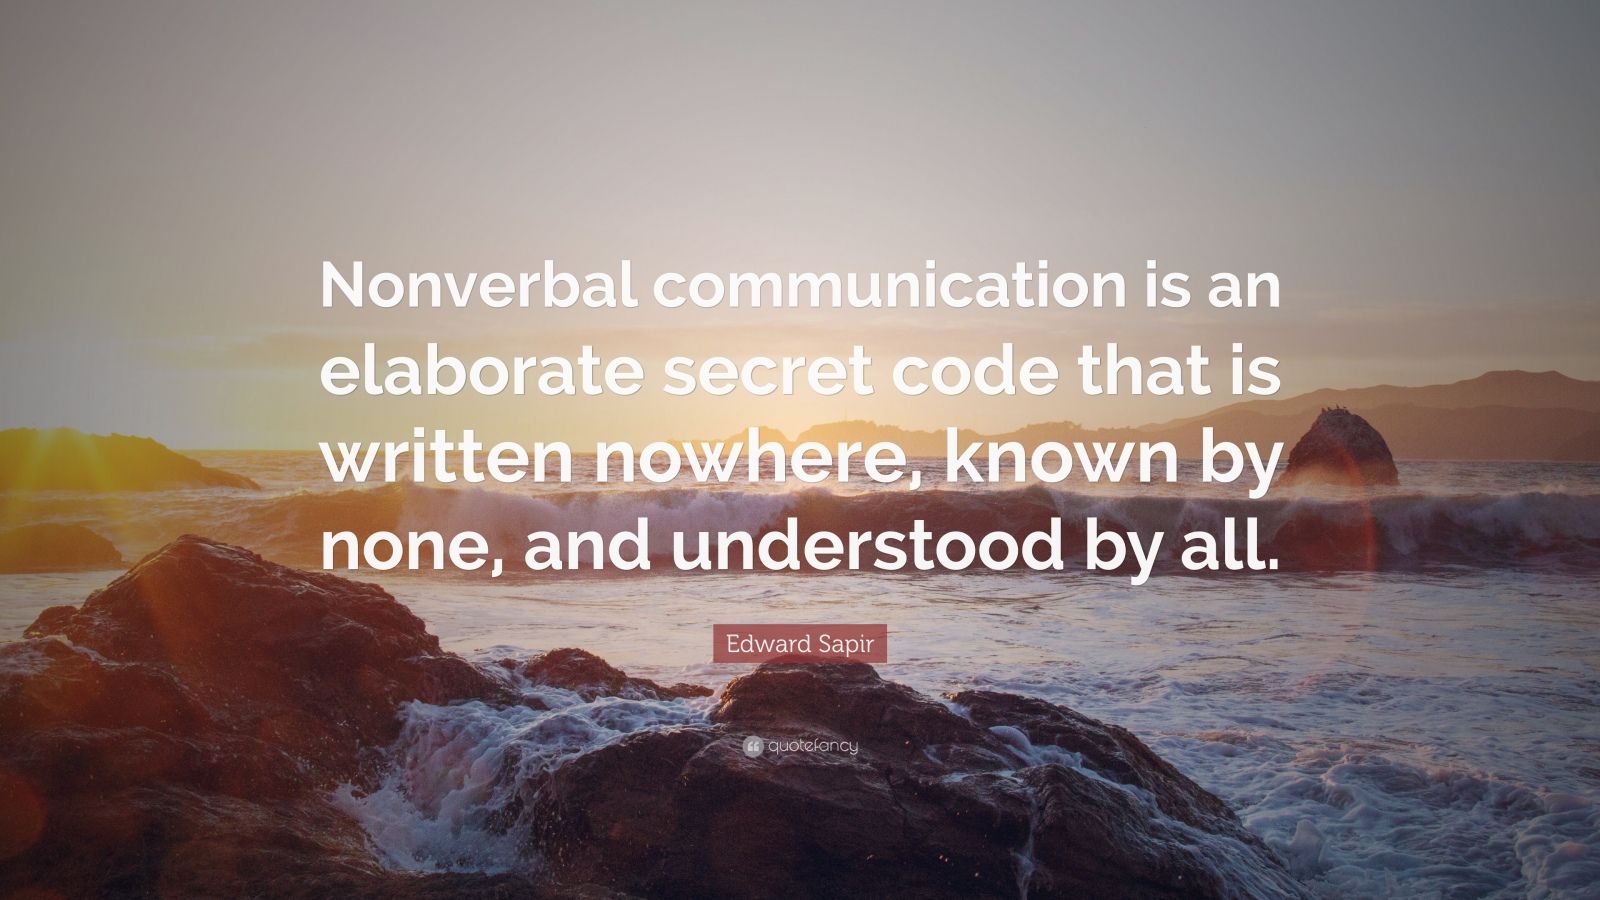 Edward Sapir Quote: “Nonverbal communication is an elaborate secret